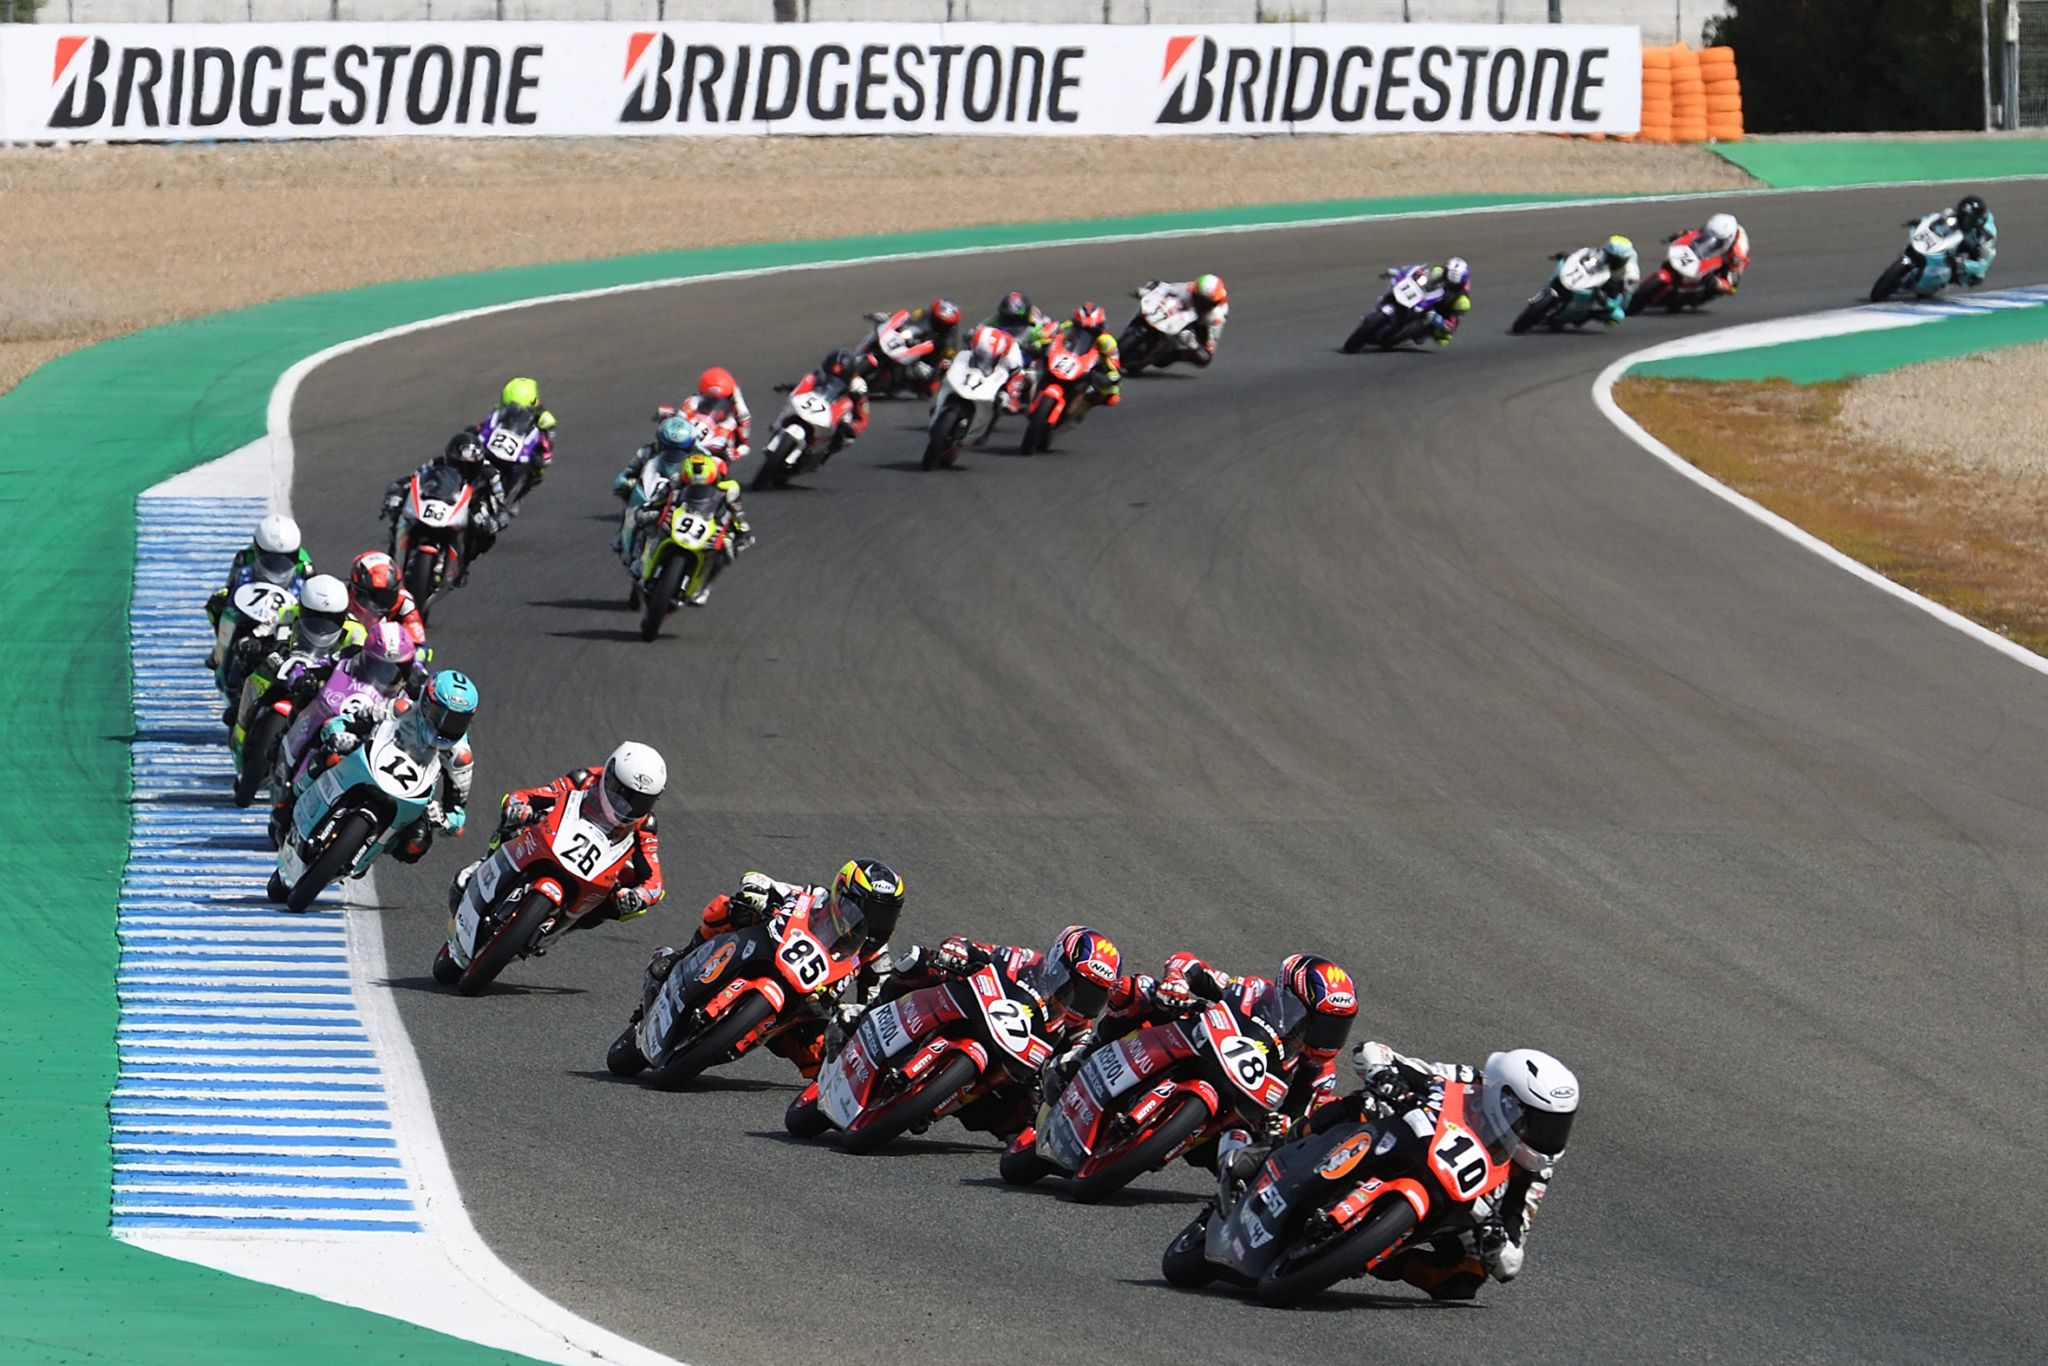 Bridgestone supports international youth motorcycle racing series